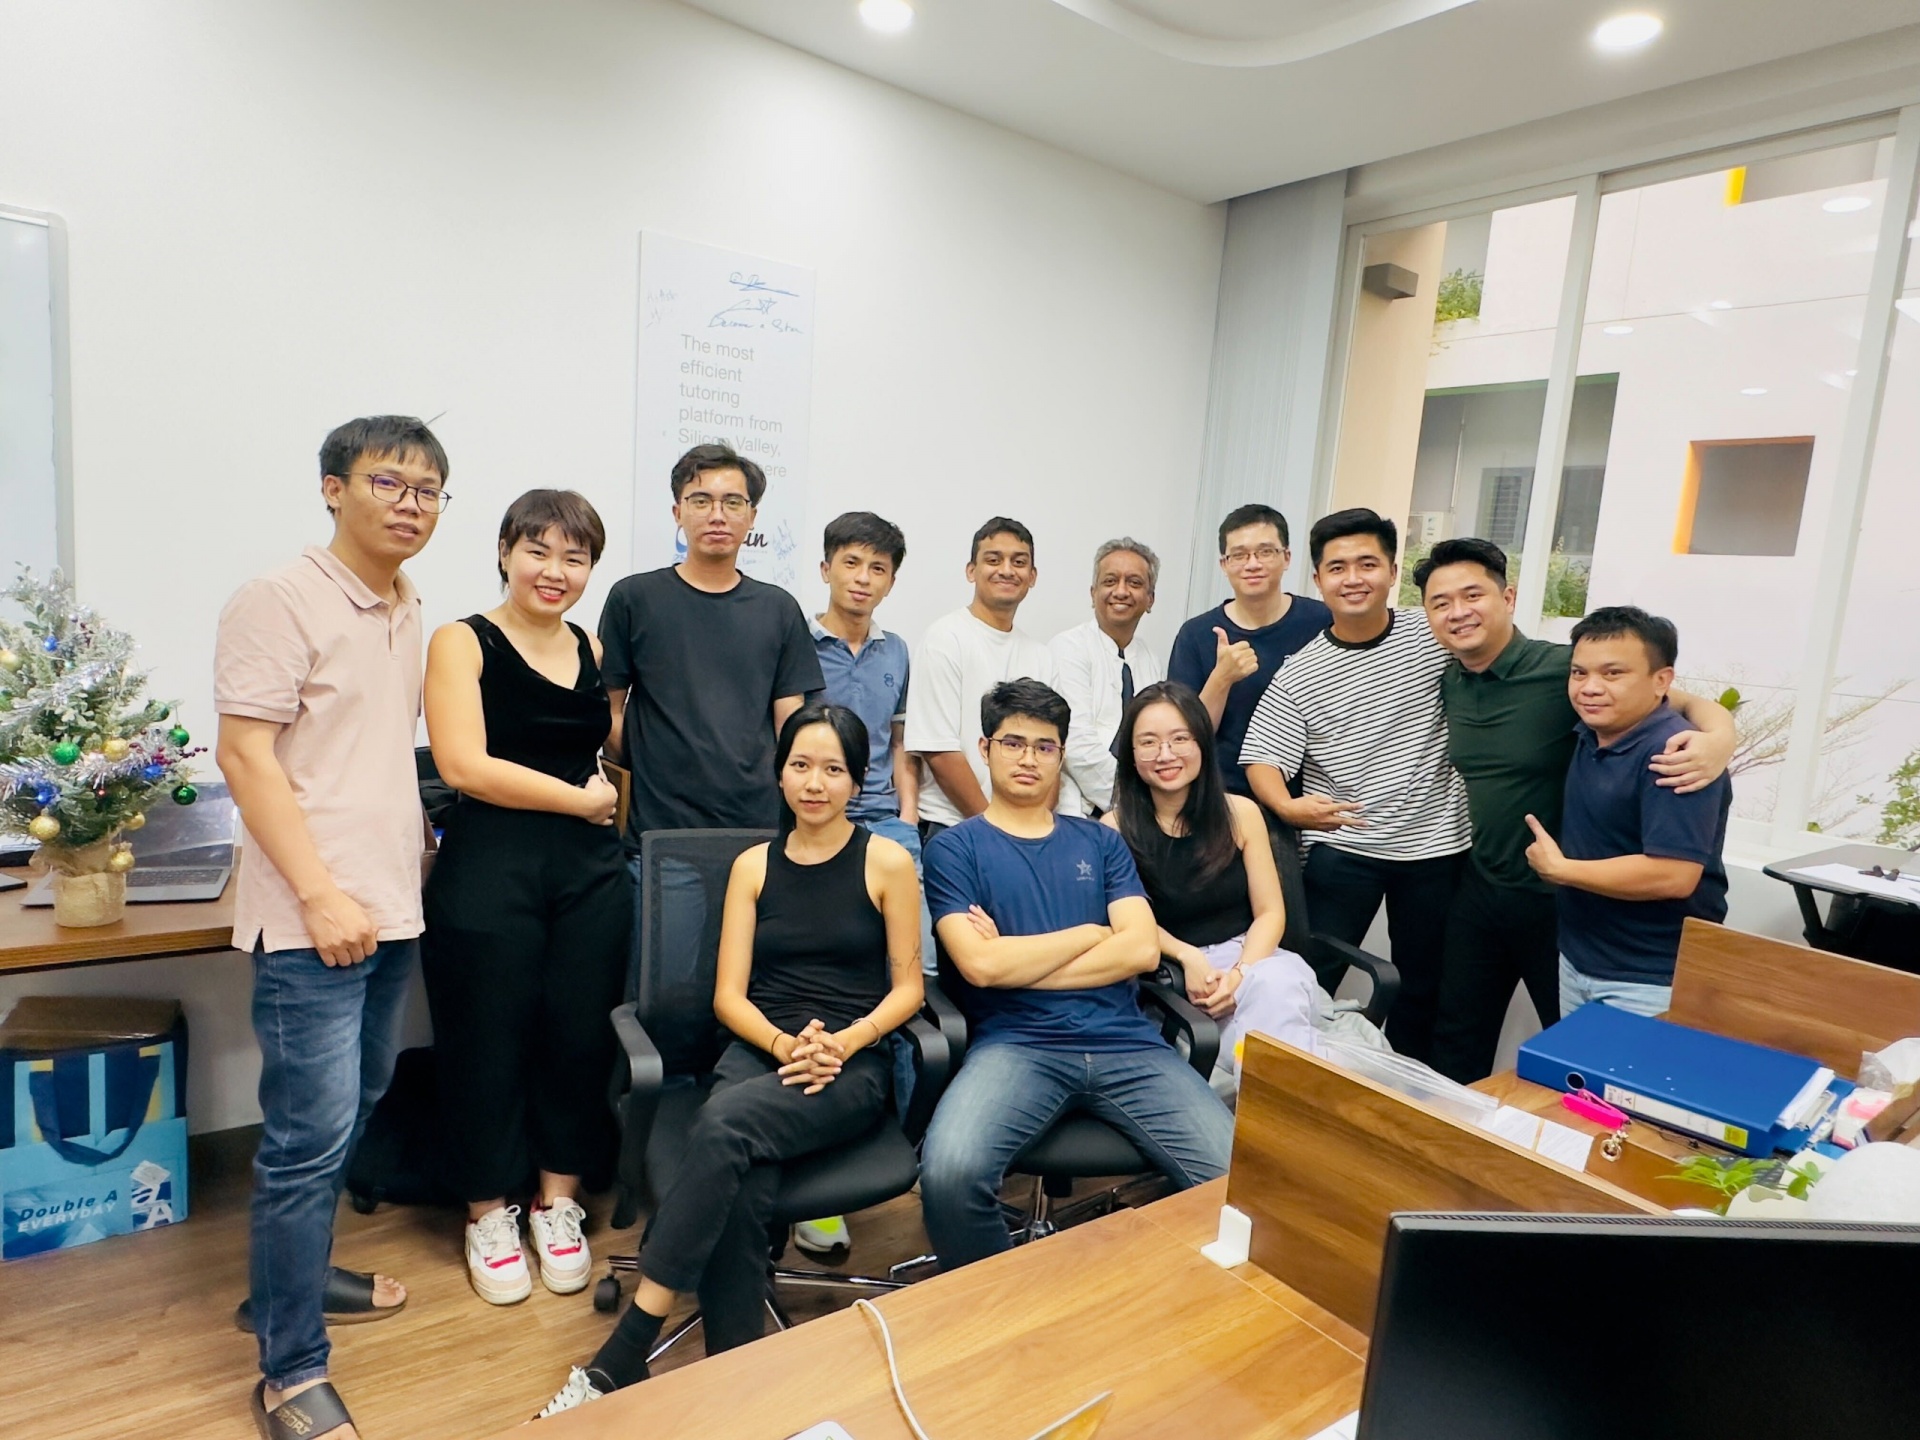 The new era of edtech in Vietnam